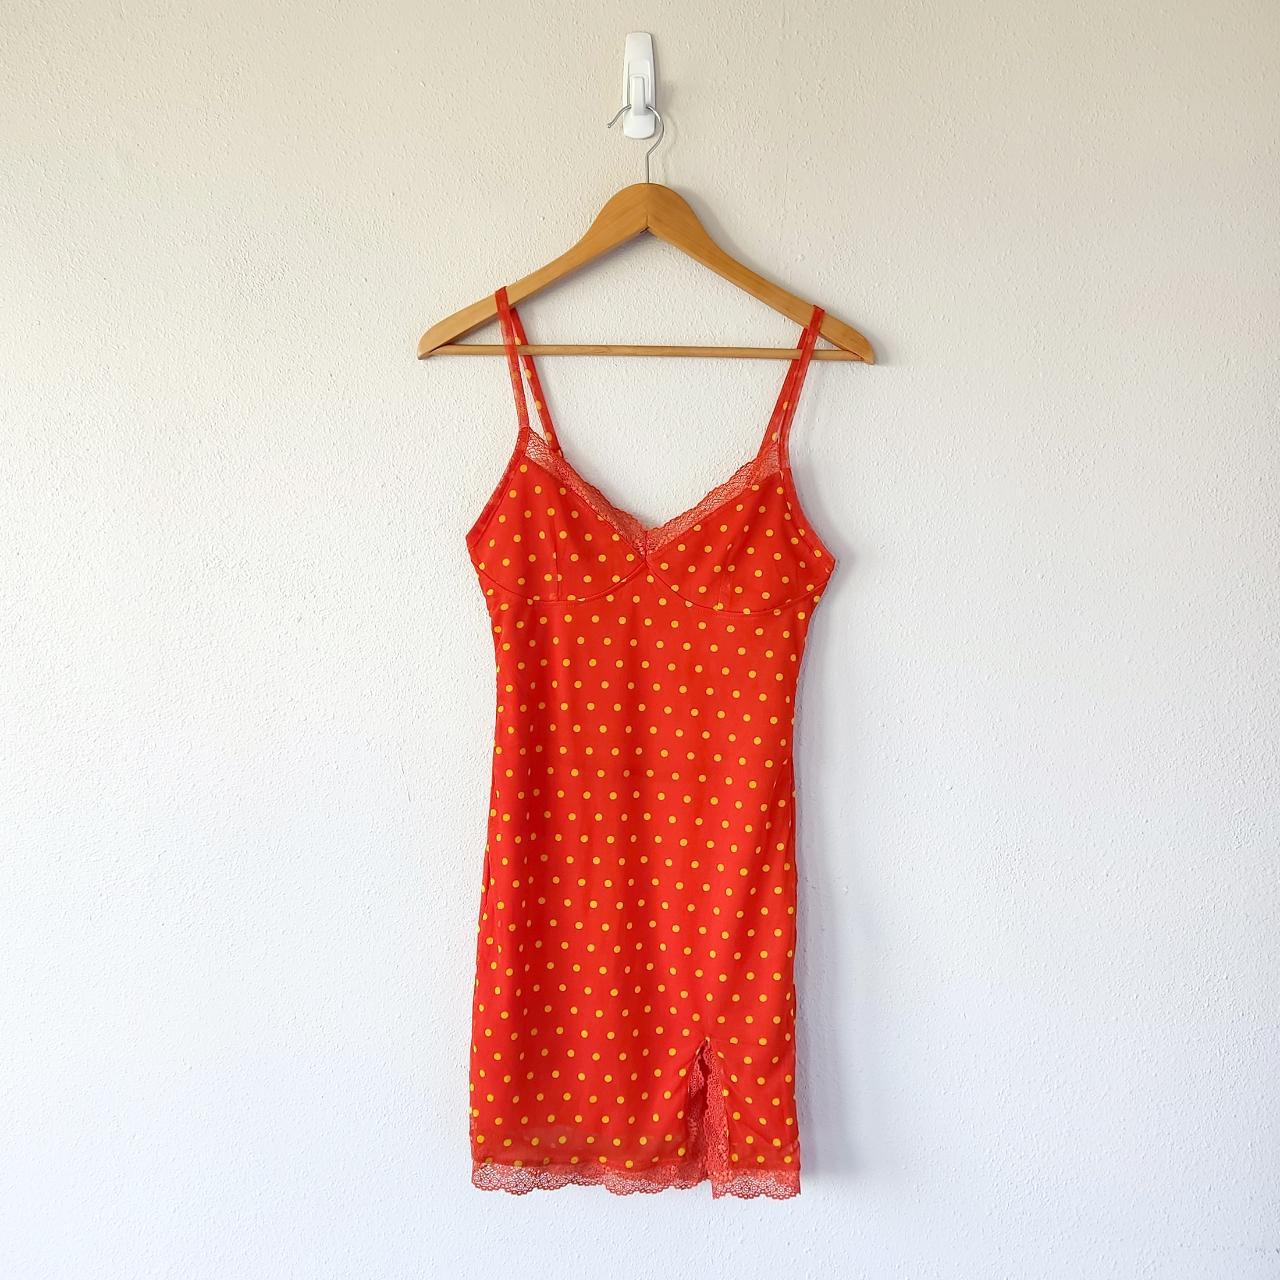 orange polka dot mesh cami mini dress Add a pop... - Depop